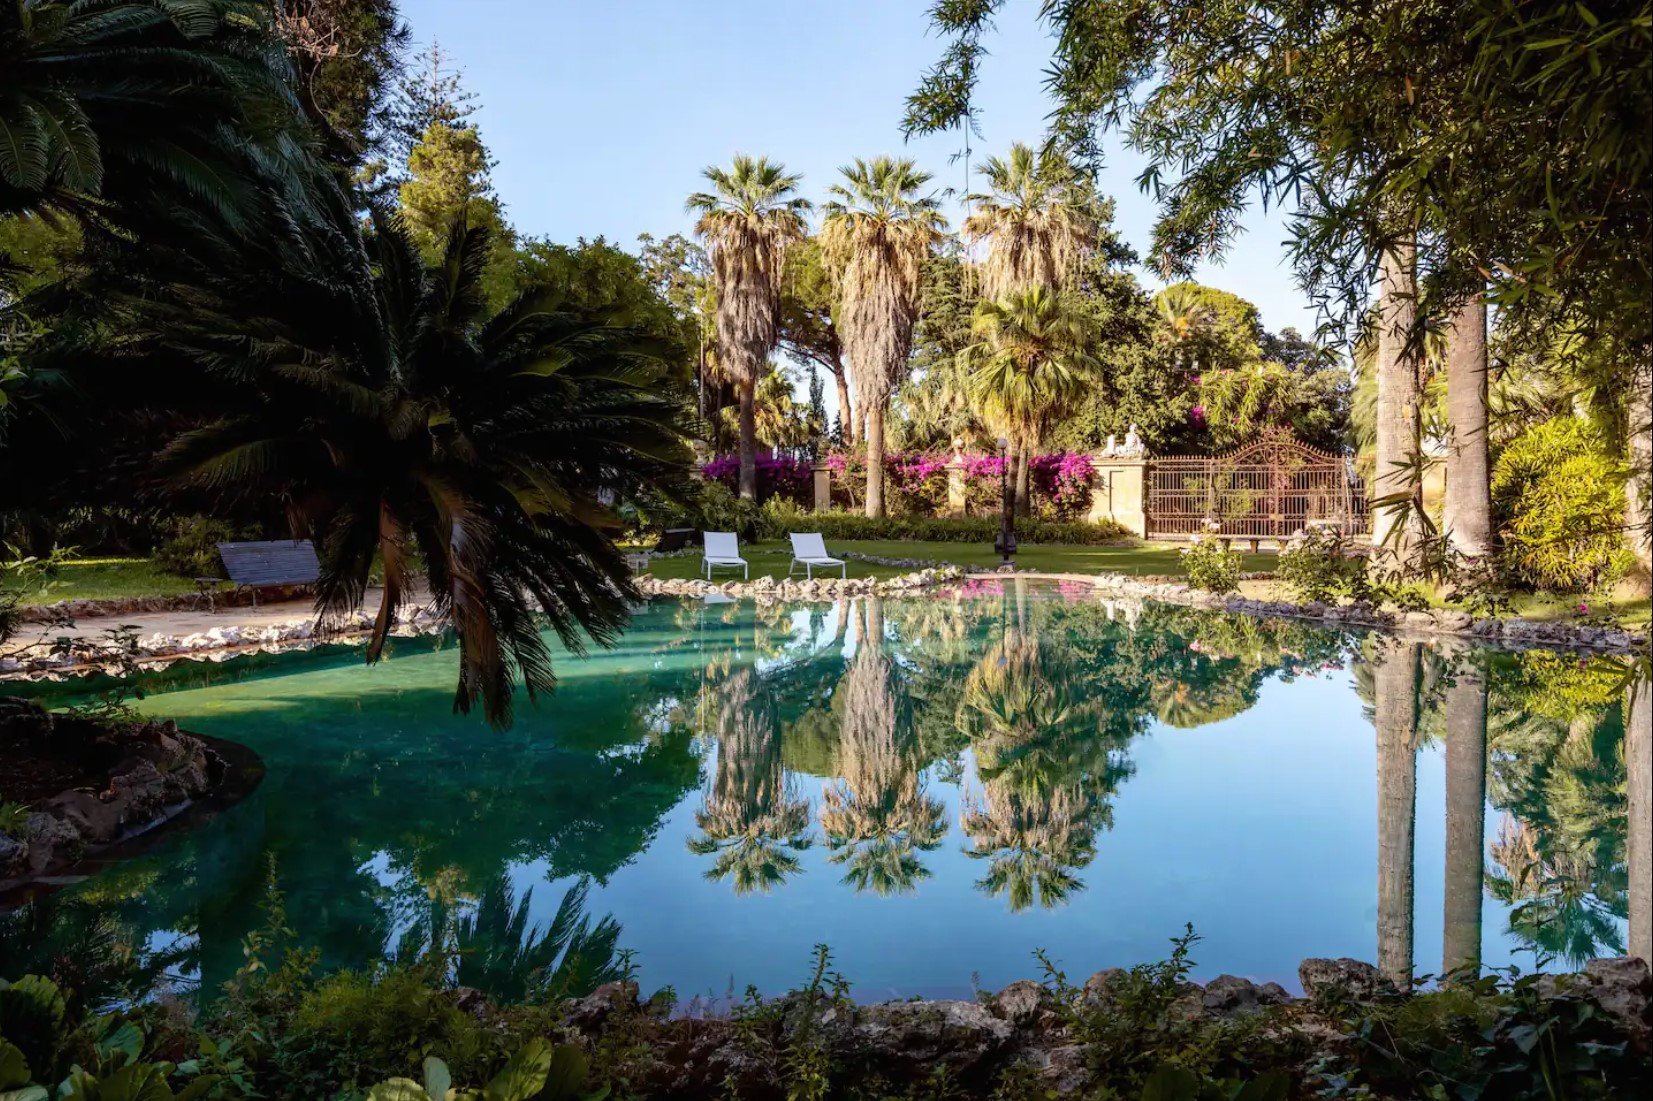 villa tasca palm tree and pool.jpg